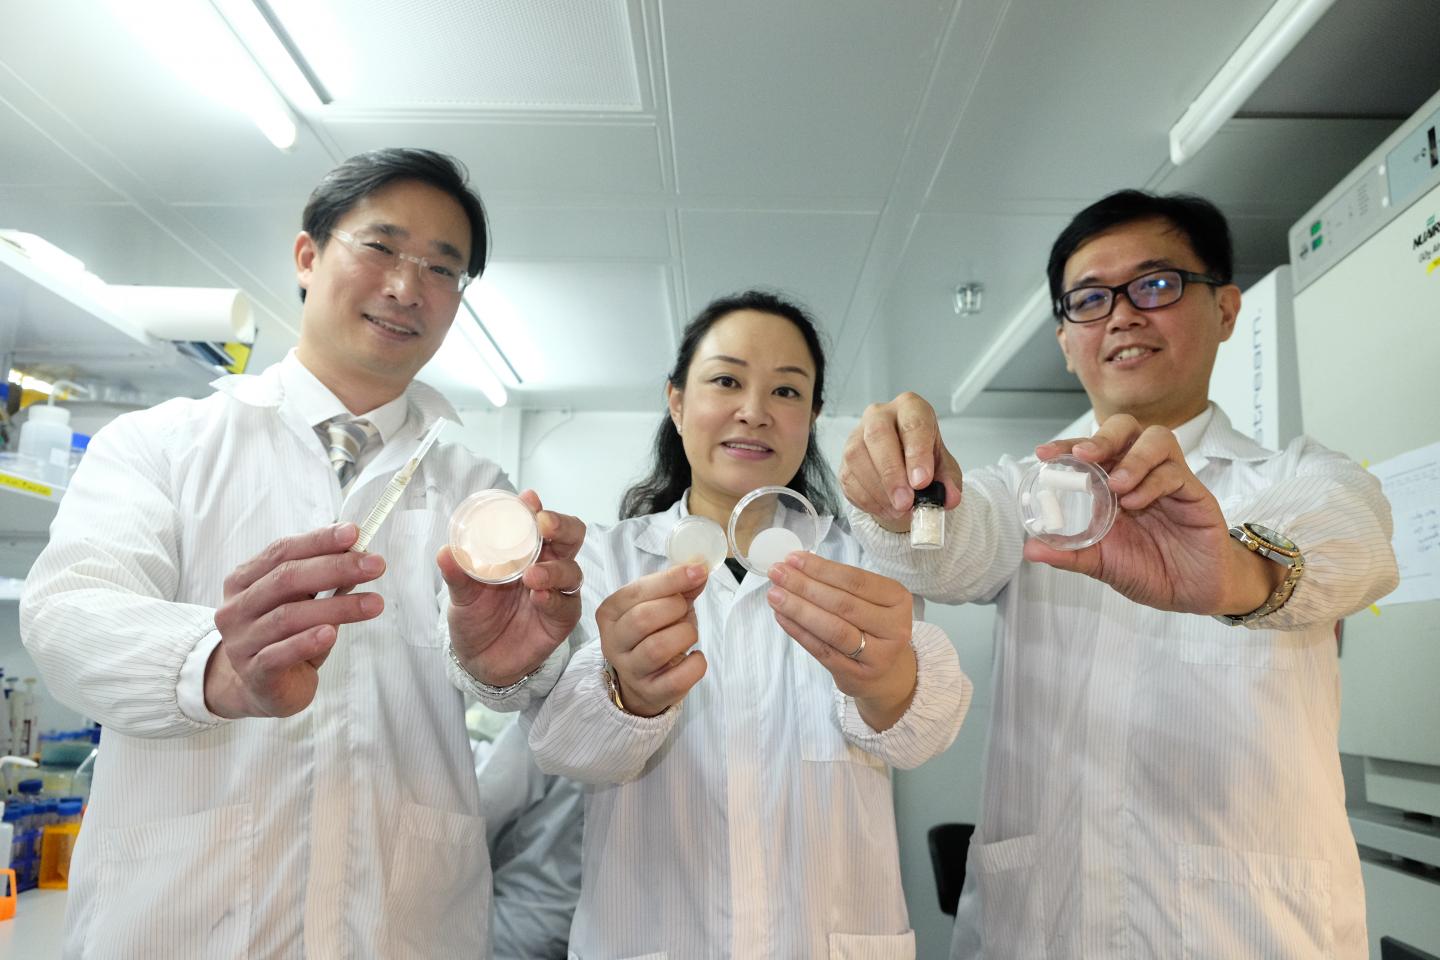 NTU Assoc Prof Andrew Tan, NTU Asst Prof Cleo Choong and Their Clinical Partner Dr Marcus Wong